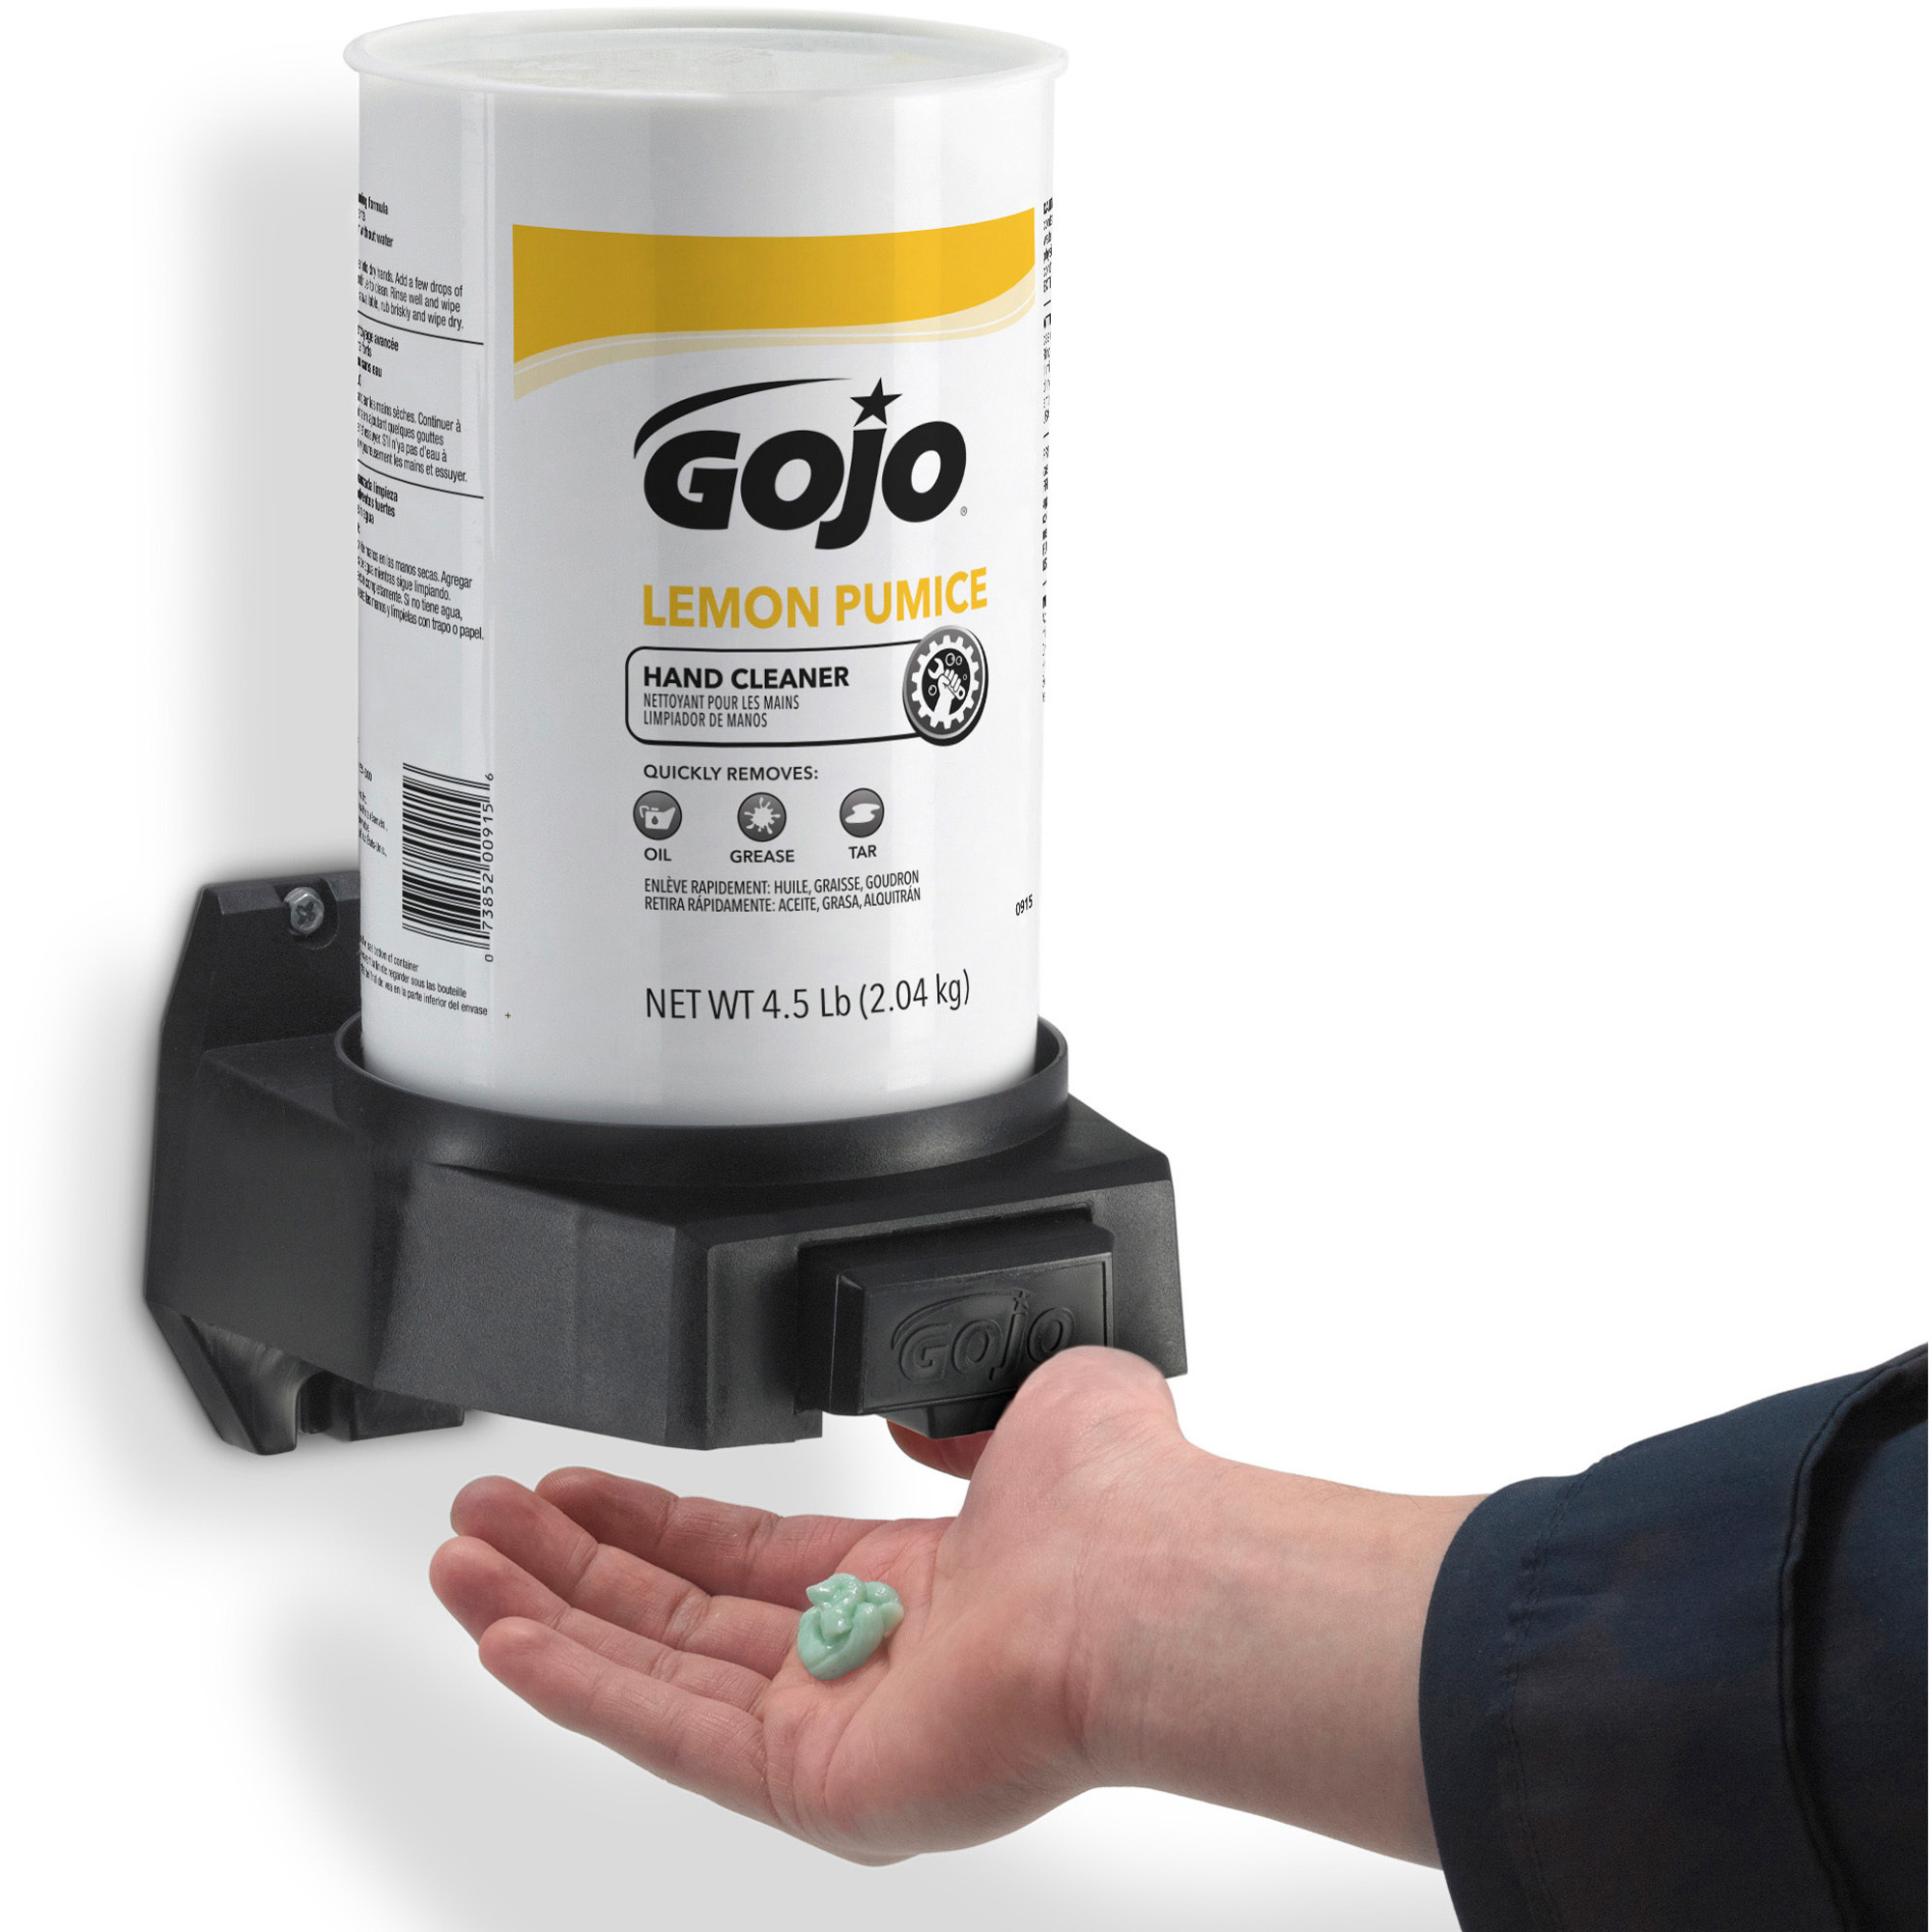 GOJ091506 - Gojo® Lemon Pumice Hand Cleaner - Lemon ScentFor